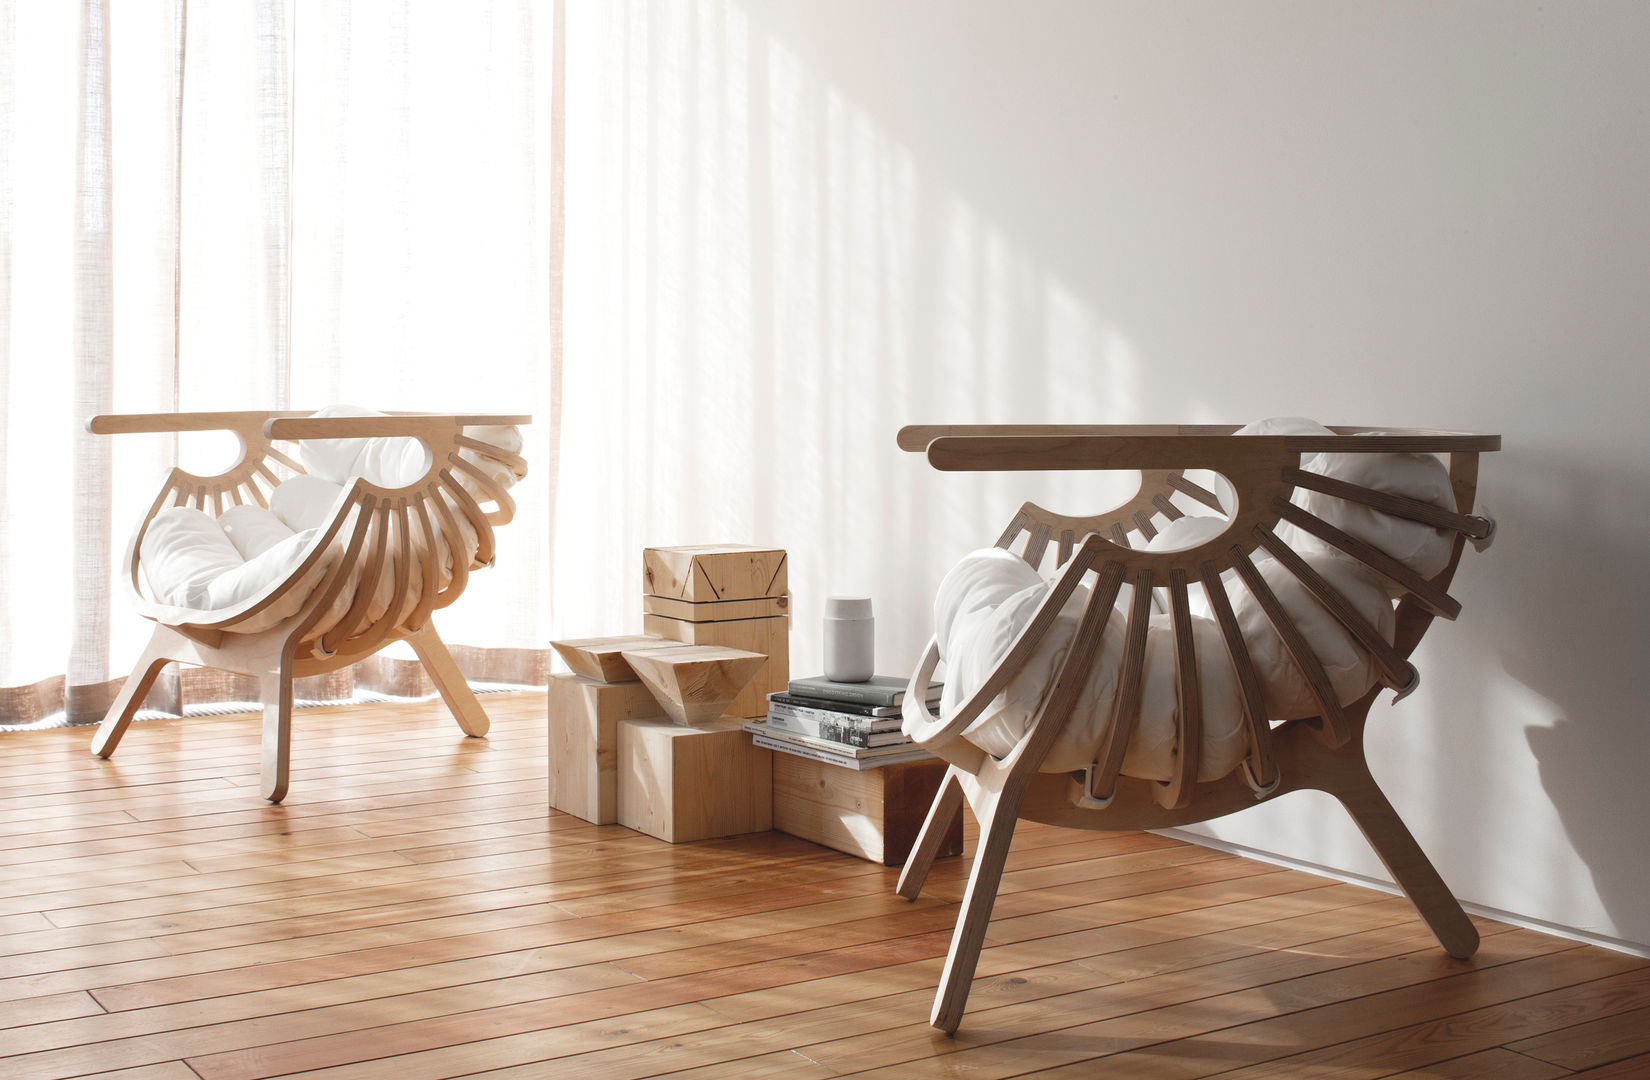 Shell Chair, Branca Lisboa Branca Lisboa Living room design ideas Lighting